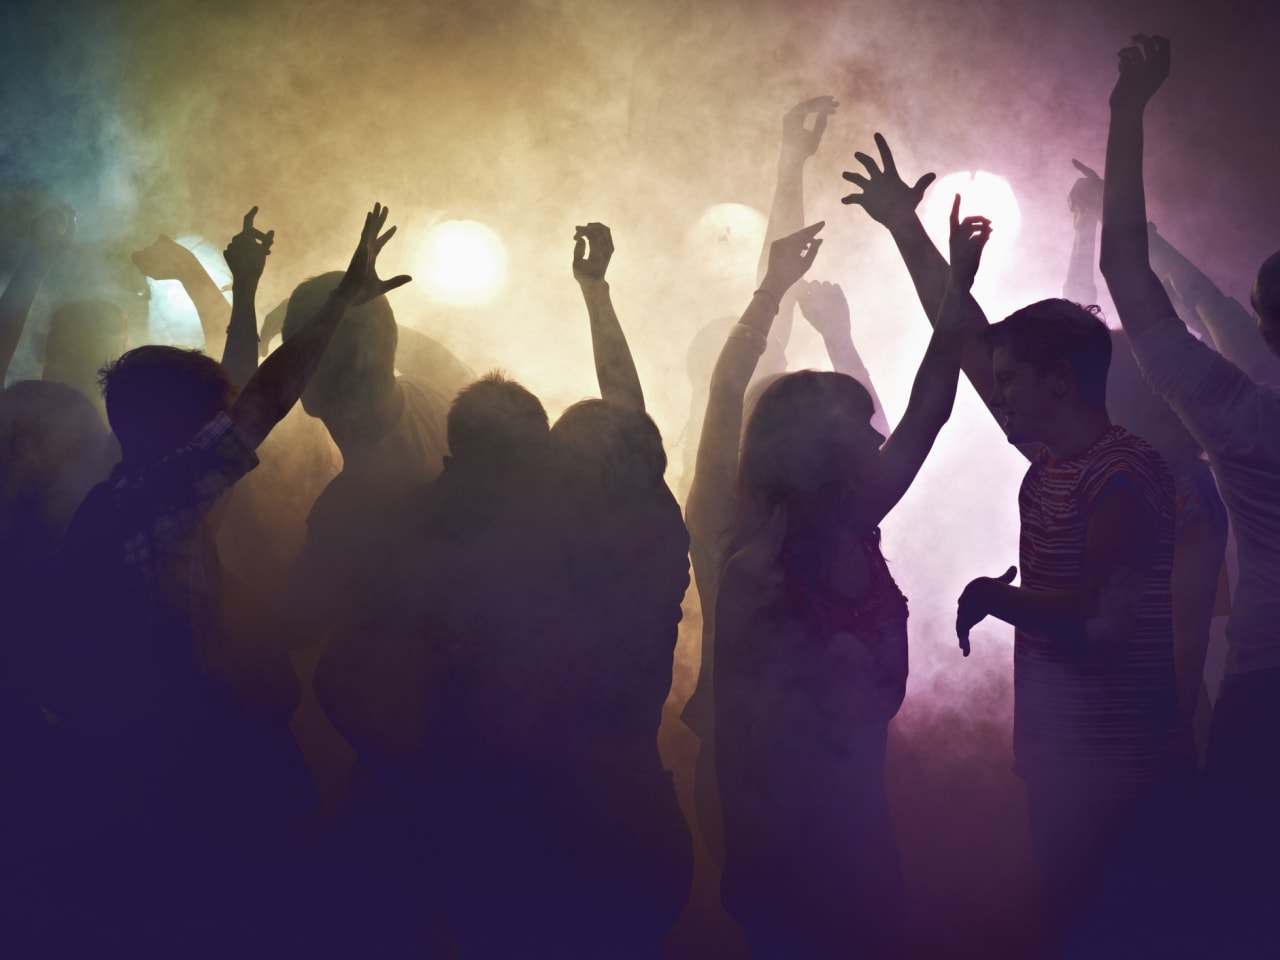 Feiern im Club © Flashpop/DigitalVision via Getty Images